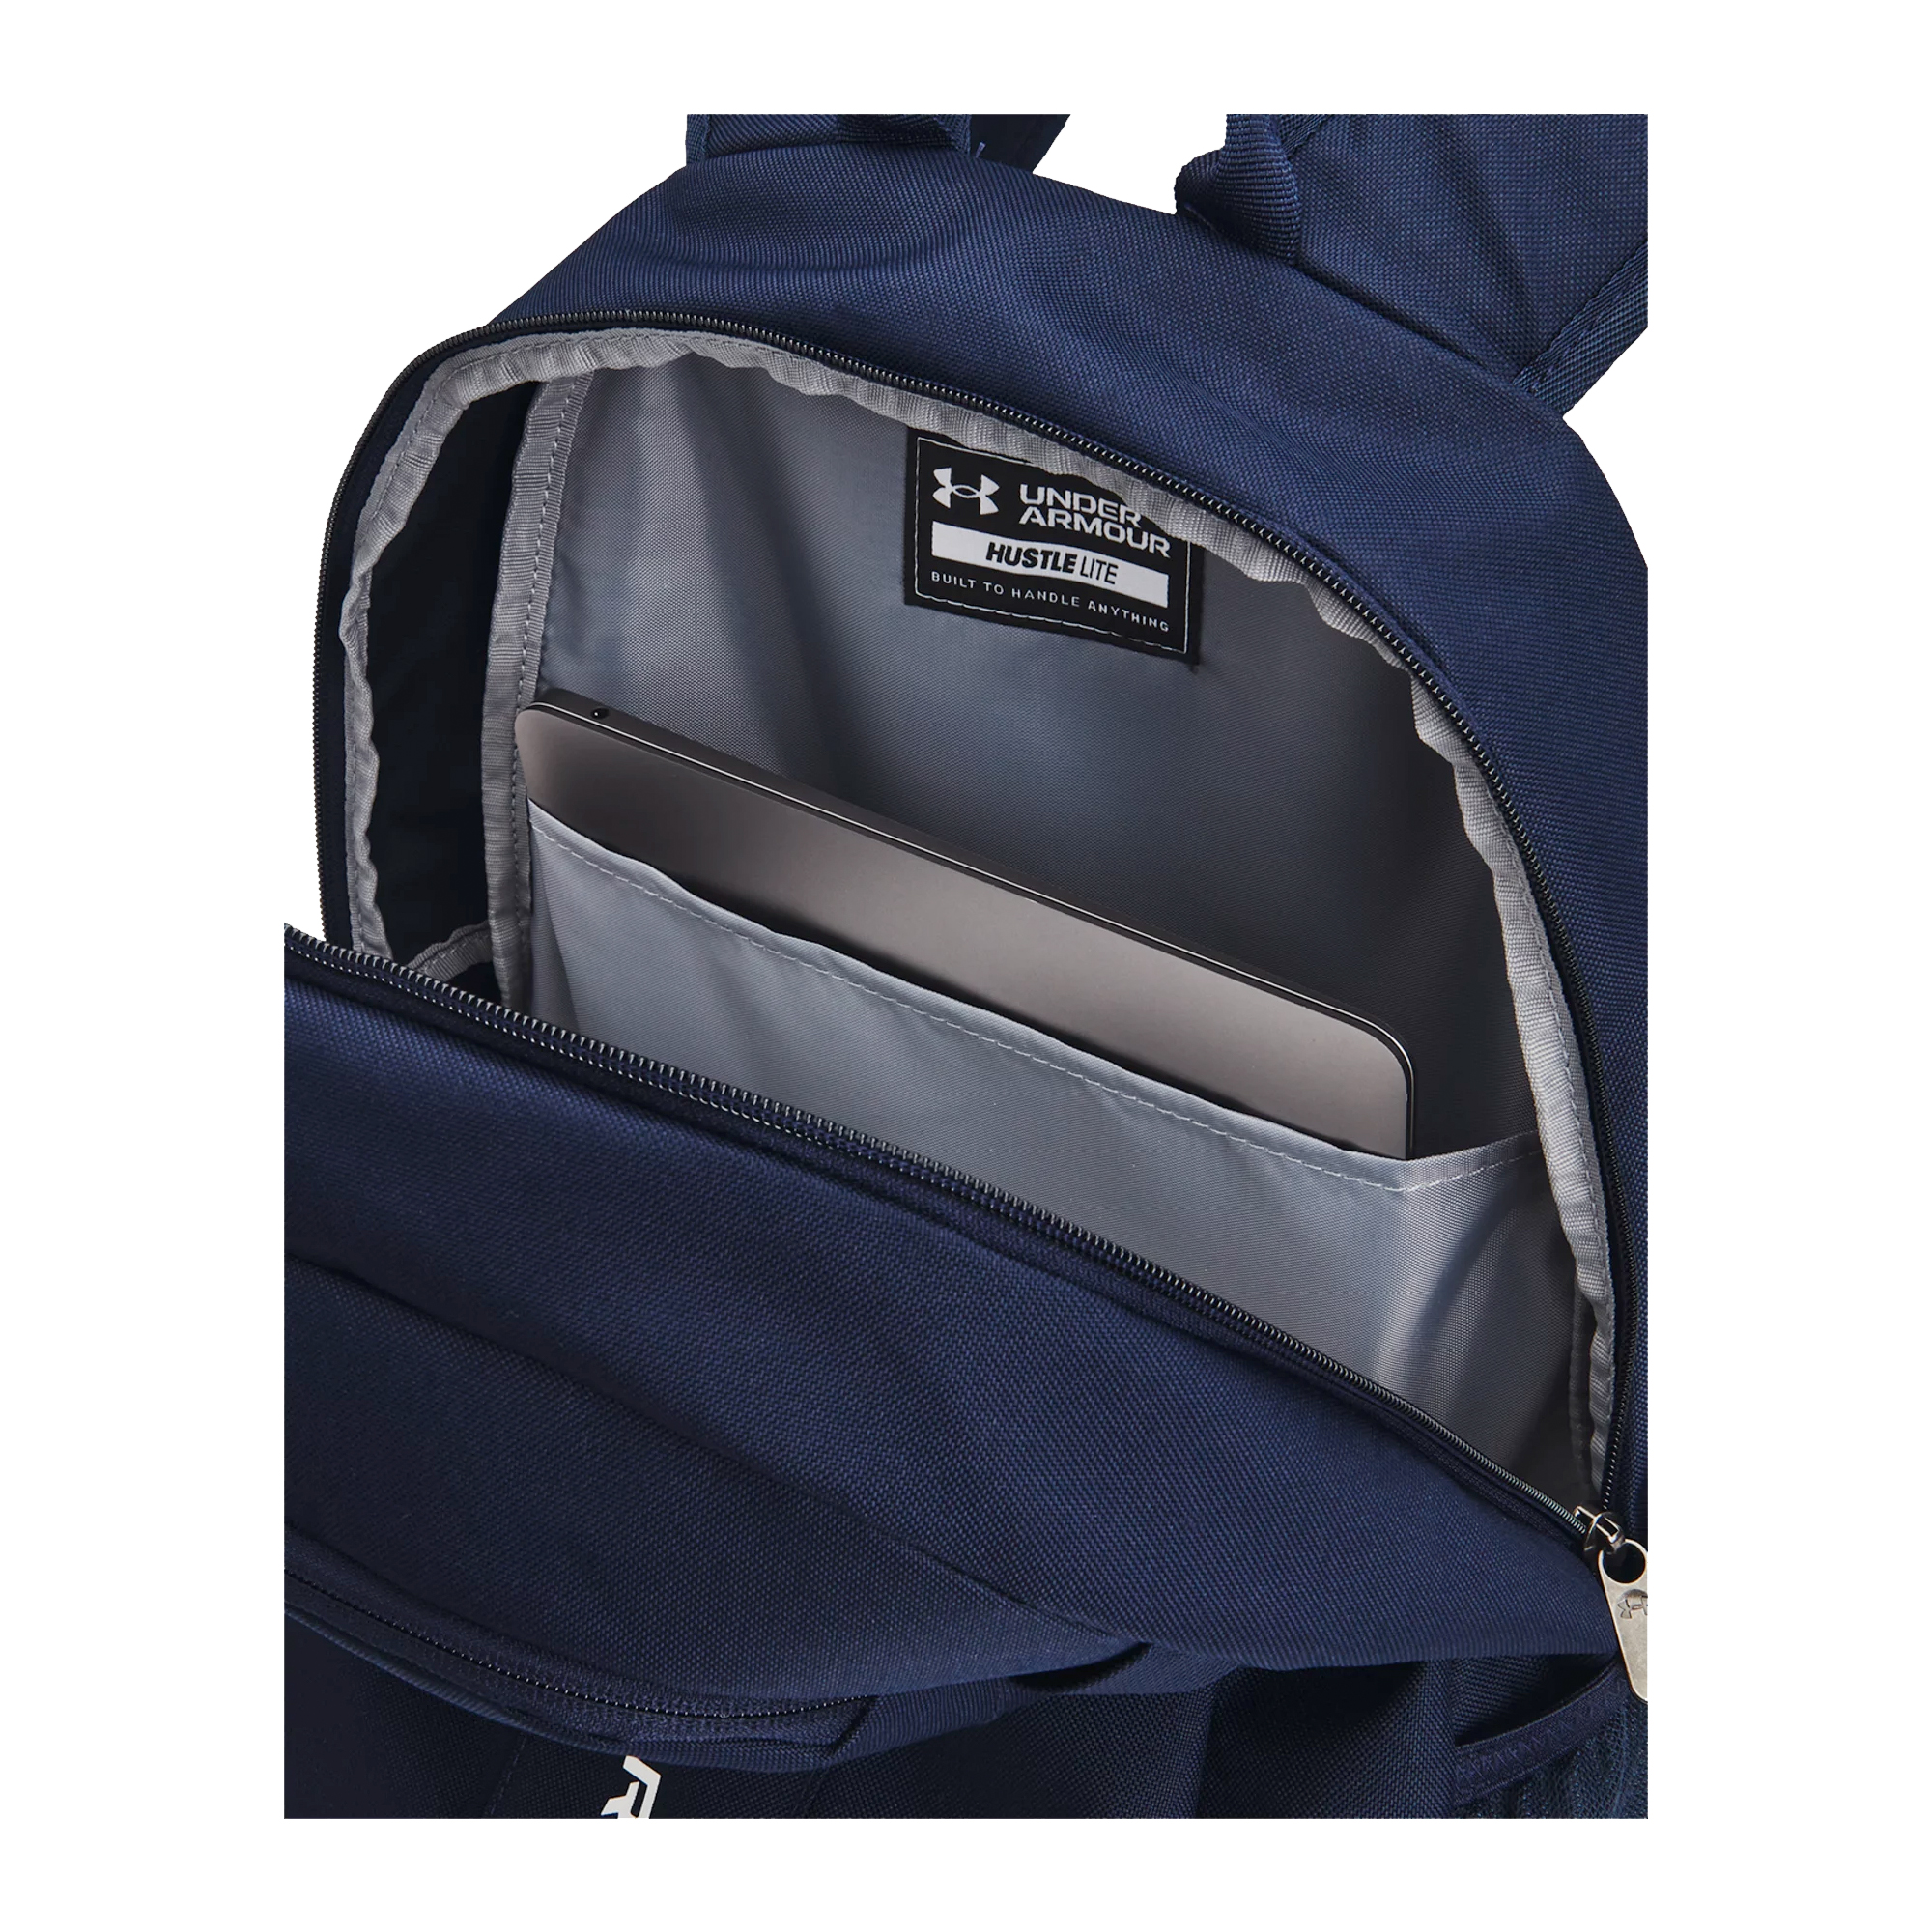 Under Armour Backpack UA Hustle Lite Ruck Gym Travel Rucksack Sports Bag  - Midnight Navy/Metallic Silver